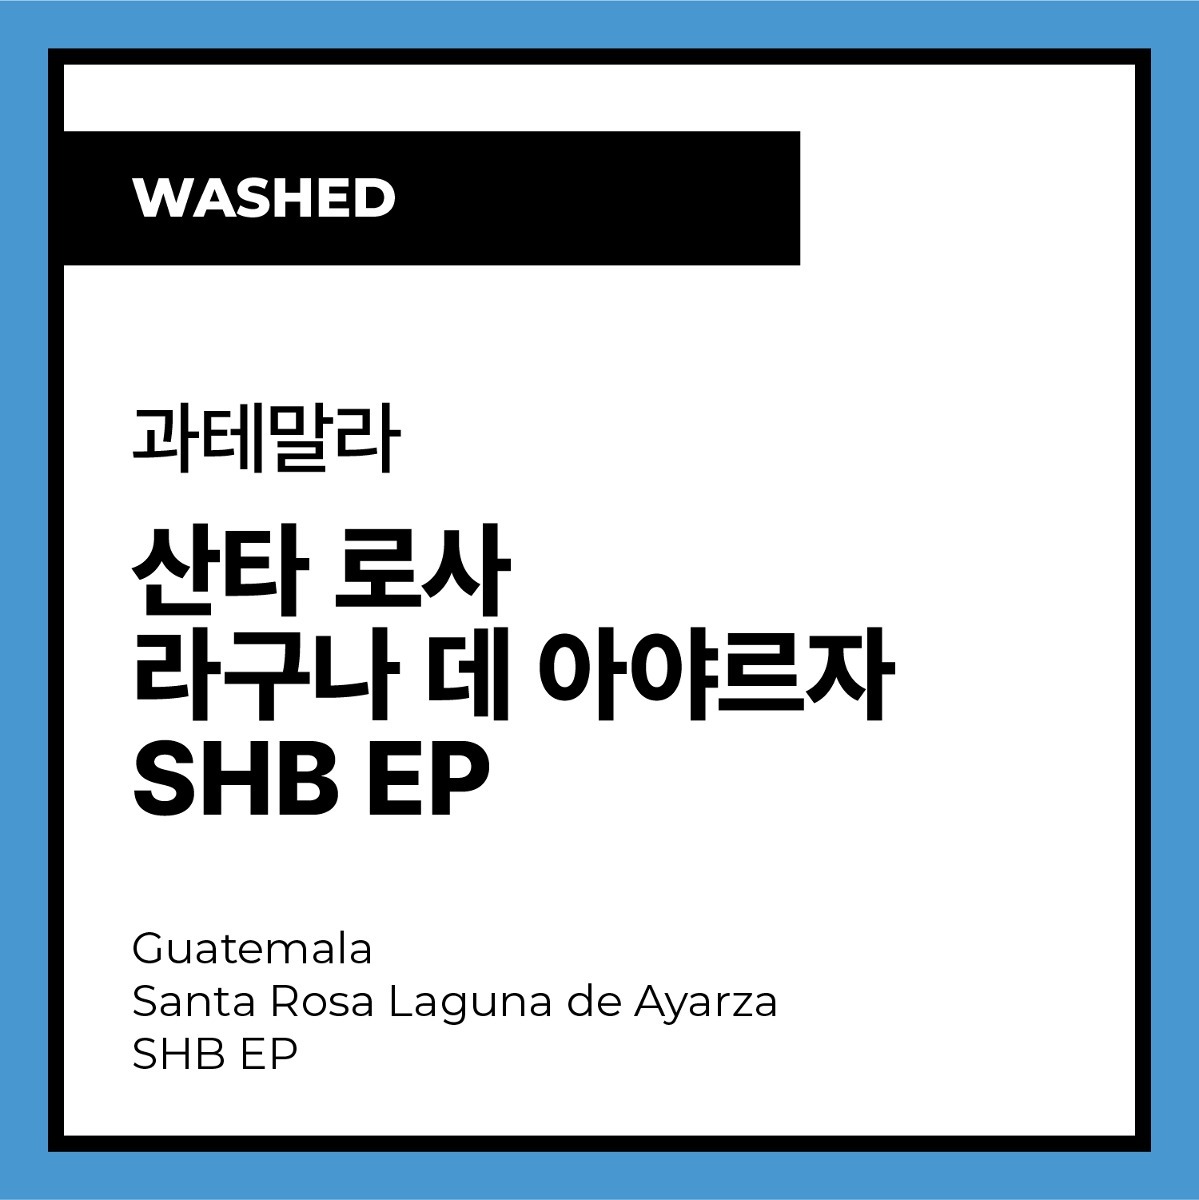 Guatemala Santa Rosa Laguna de Ayarza SHB EP (Washed) 과테말라 산타 로사 라구나 데 아야르자 SHB EP (워시드)